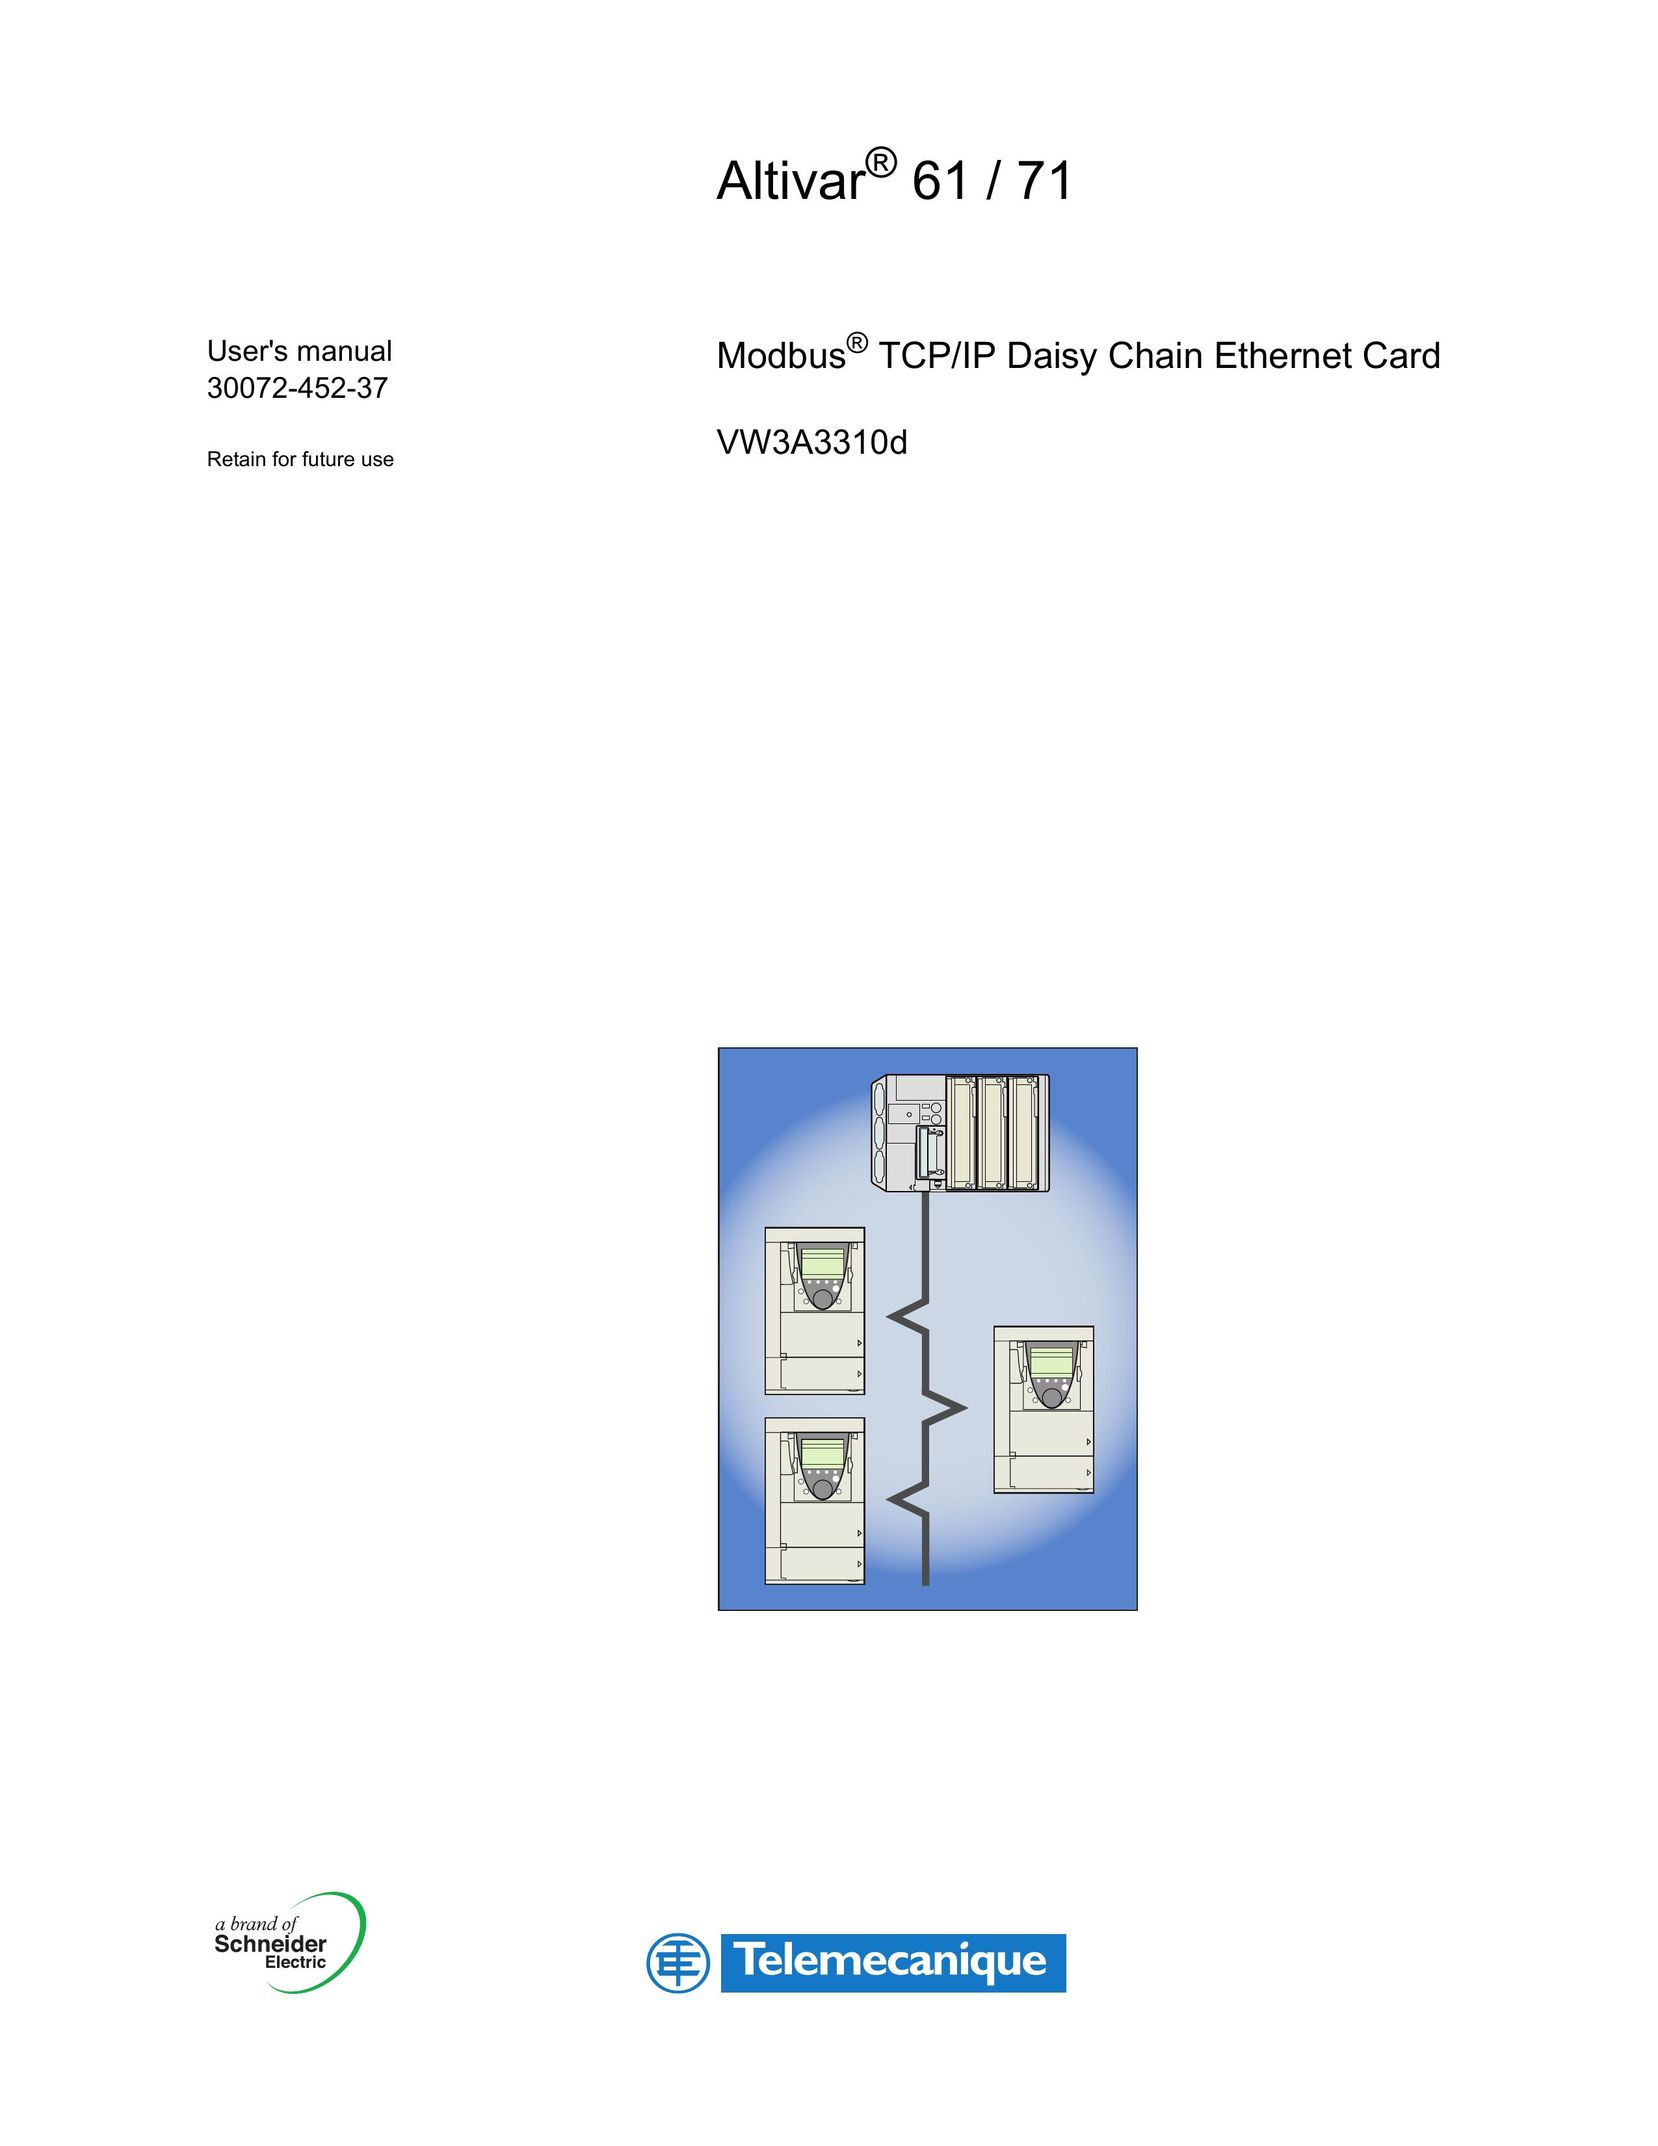 Schneider Electric VW3A3310d Network Card User Manual